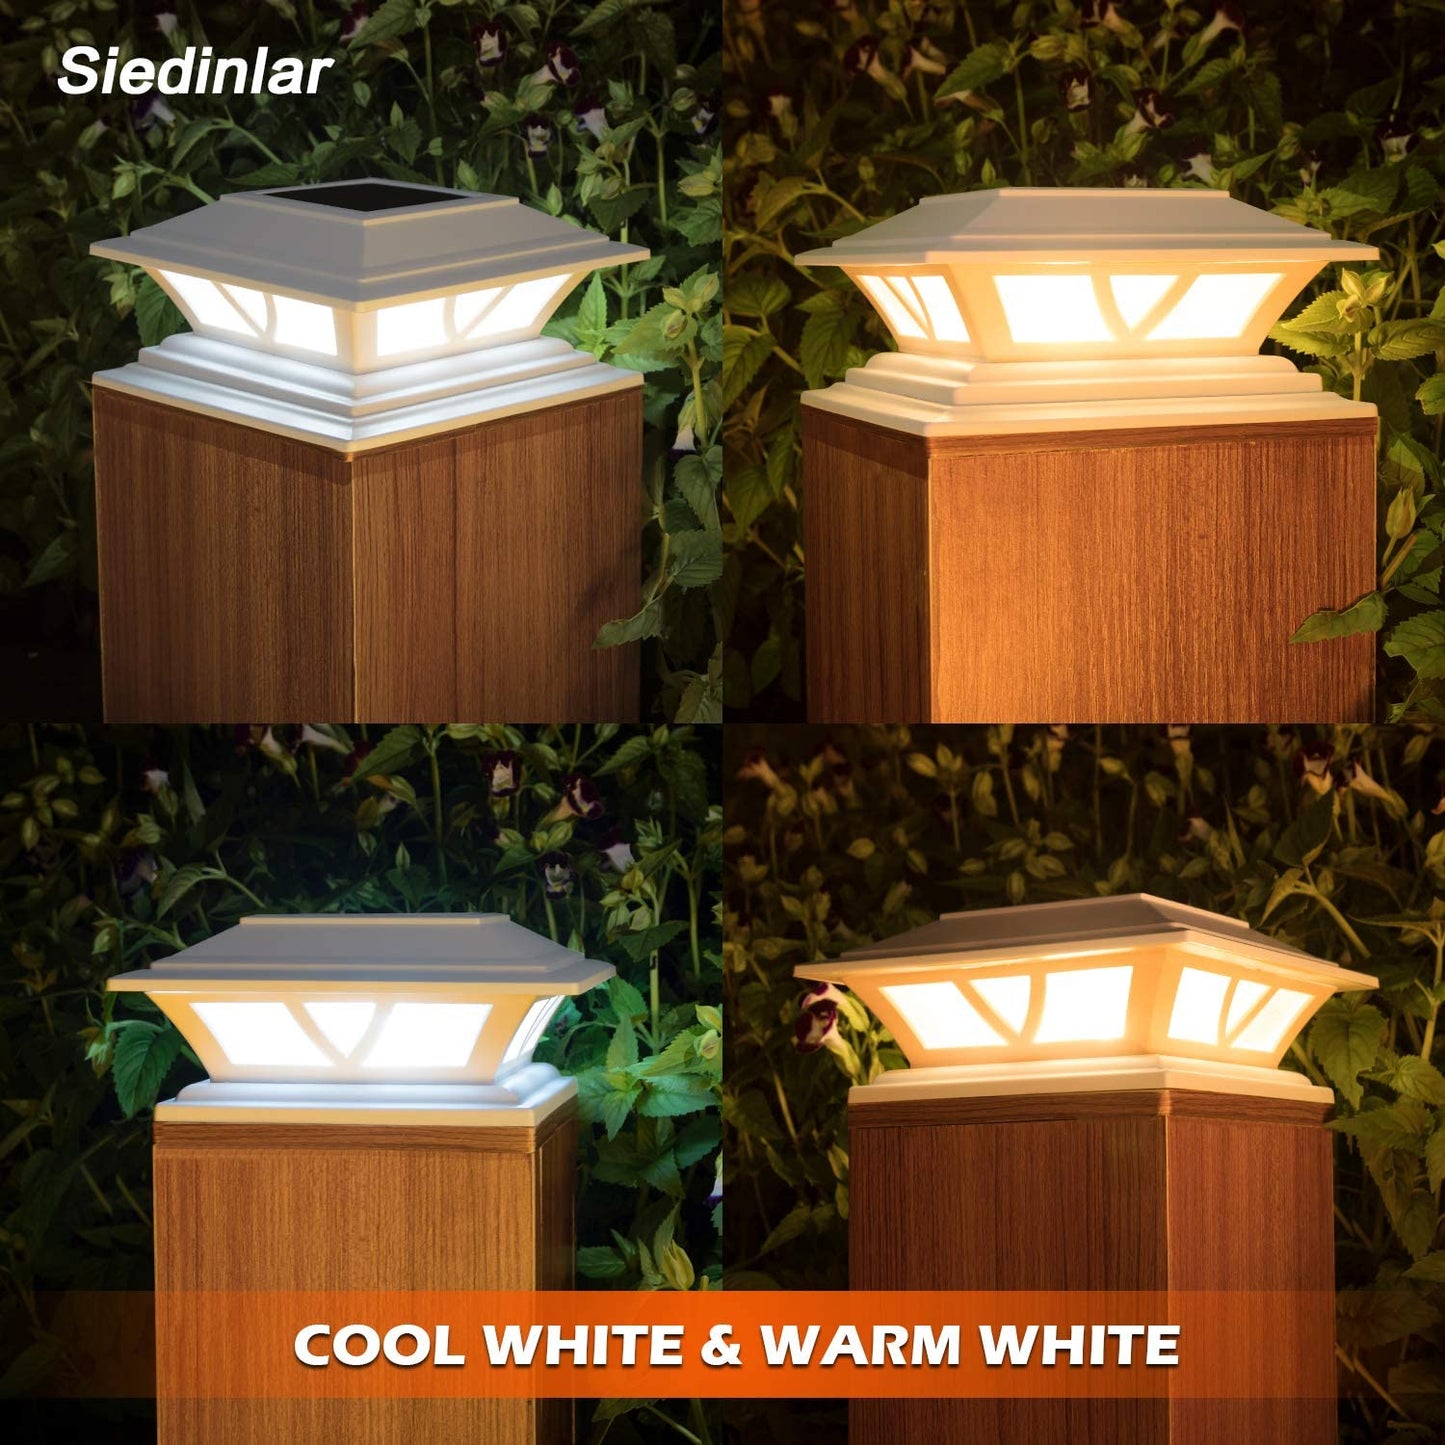 Siedinlar SD0116W Solar Post Lights Outdoor 2 Modes LED Fence Deck Cap Light for 4x4 5x5 6x6 Posts Garden Patio Decoration Warm White/Cool White Lighting White (2 Pack)